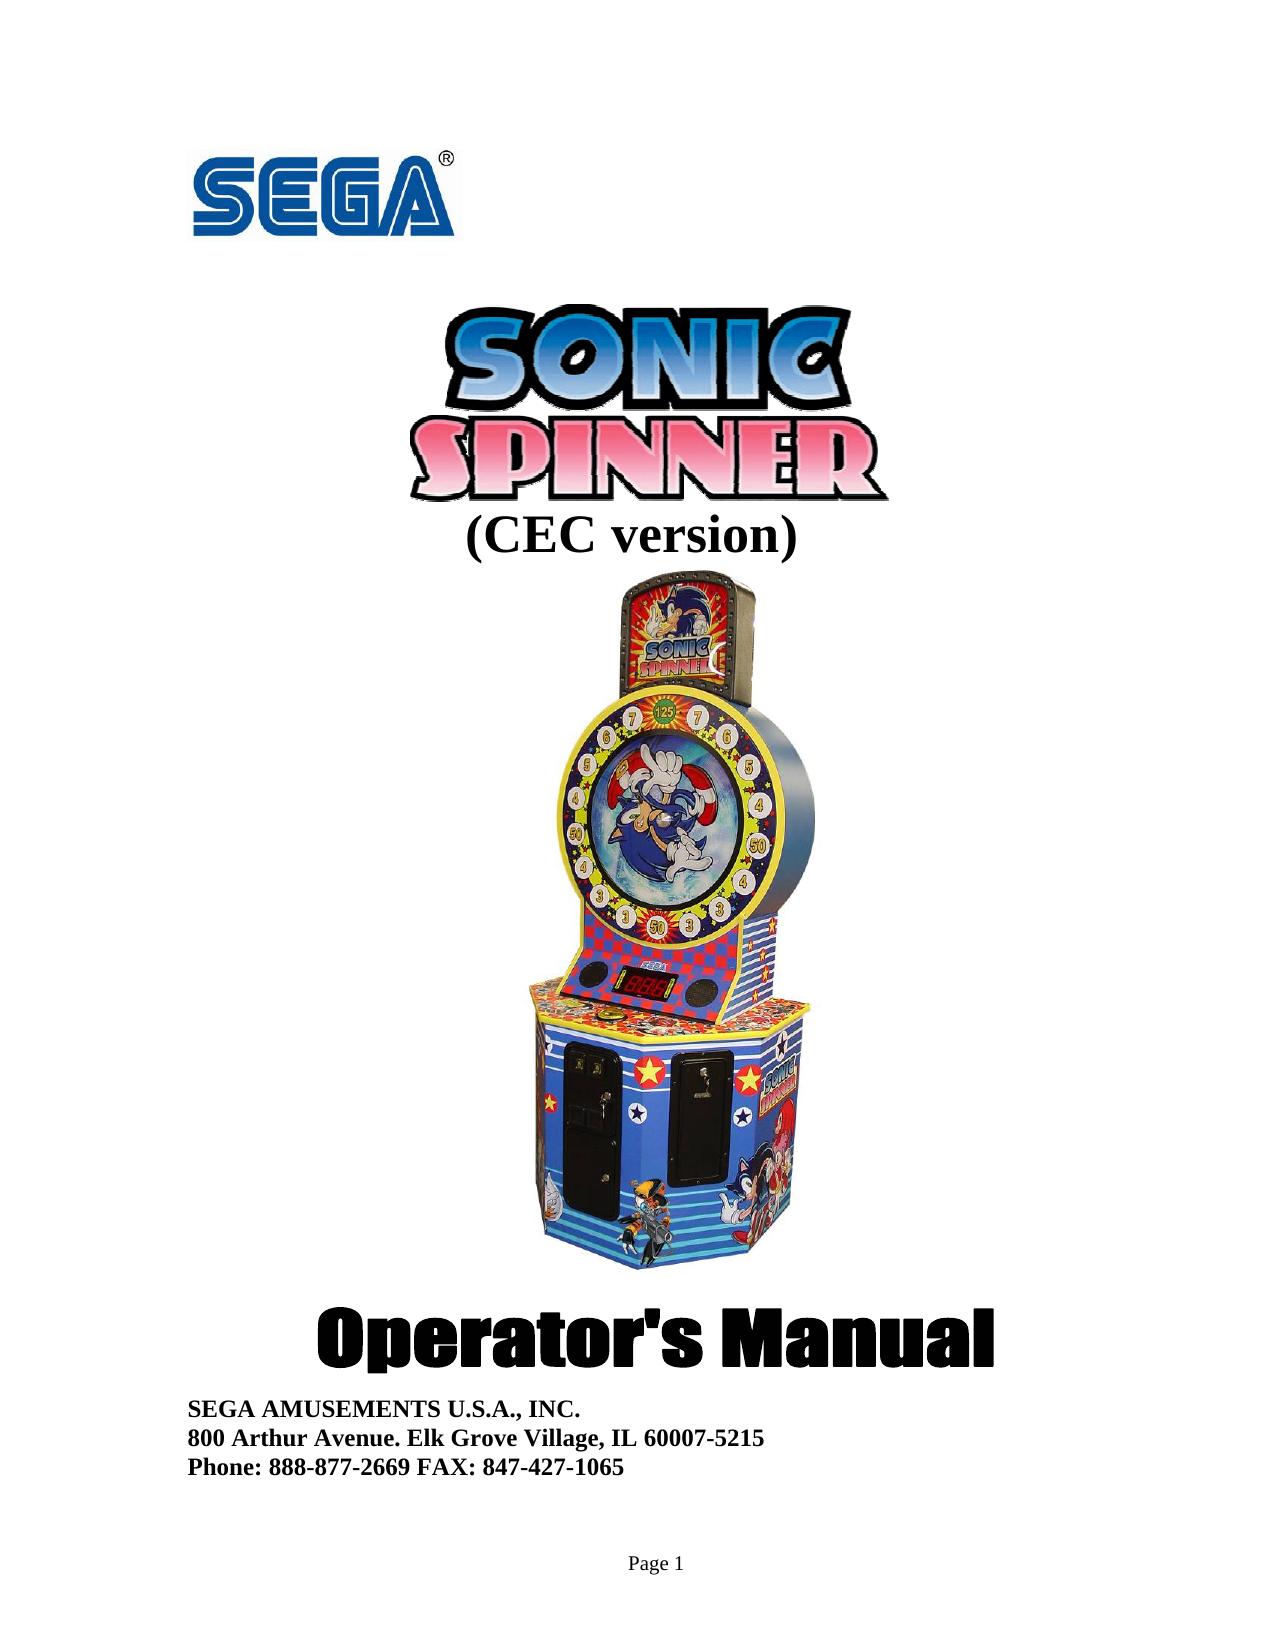 Microsoft Word - 040907 Sonic Spinner 07 Manual.doc